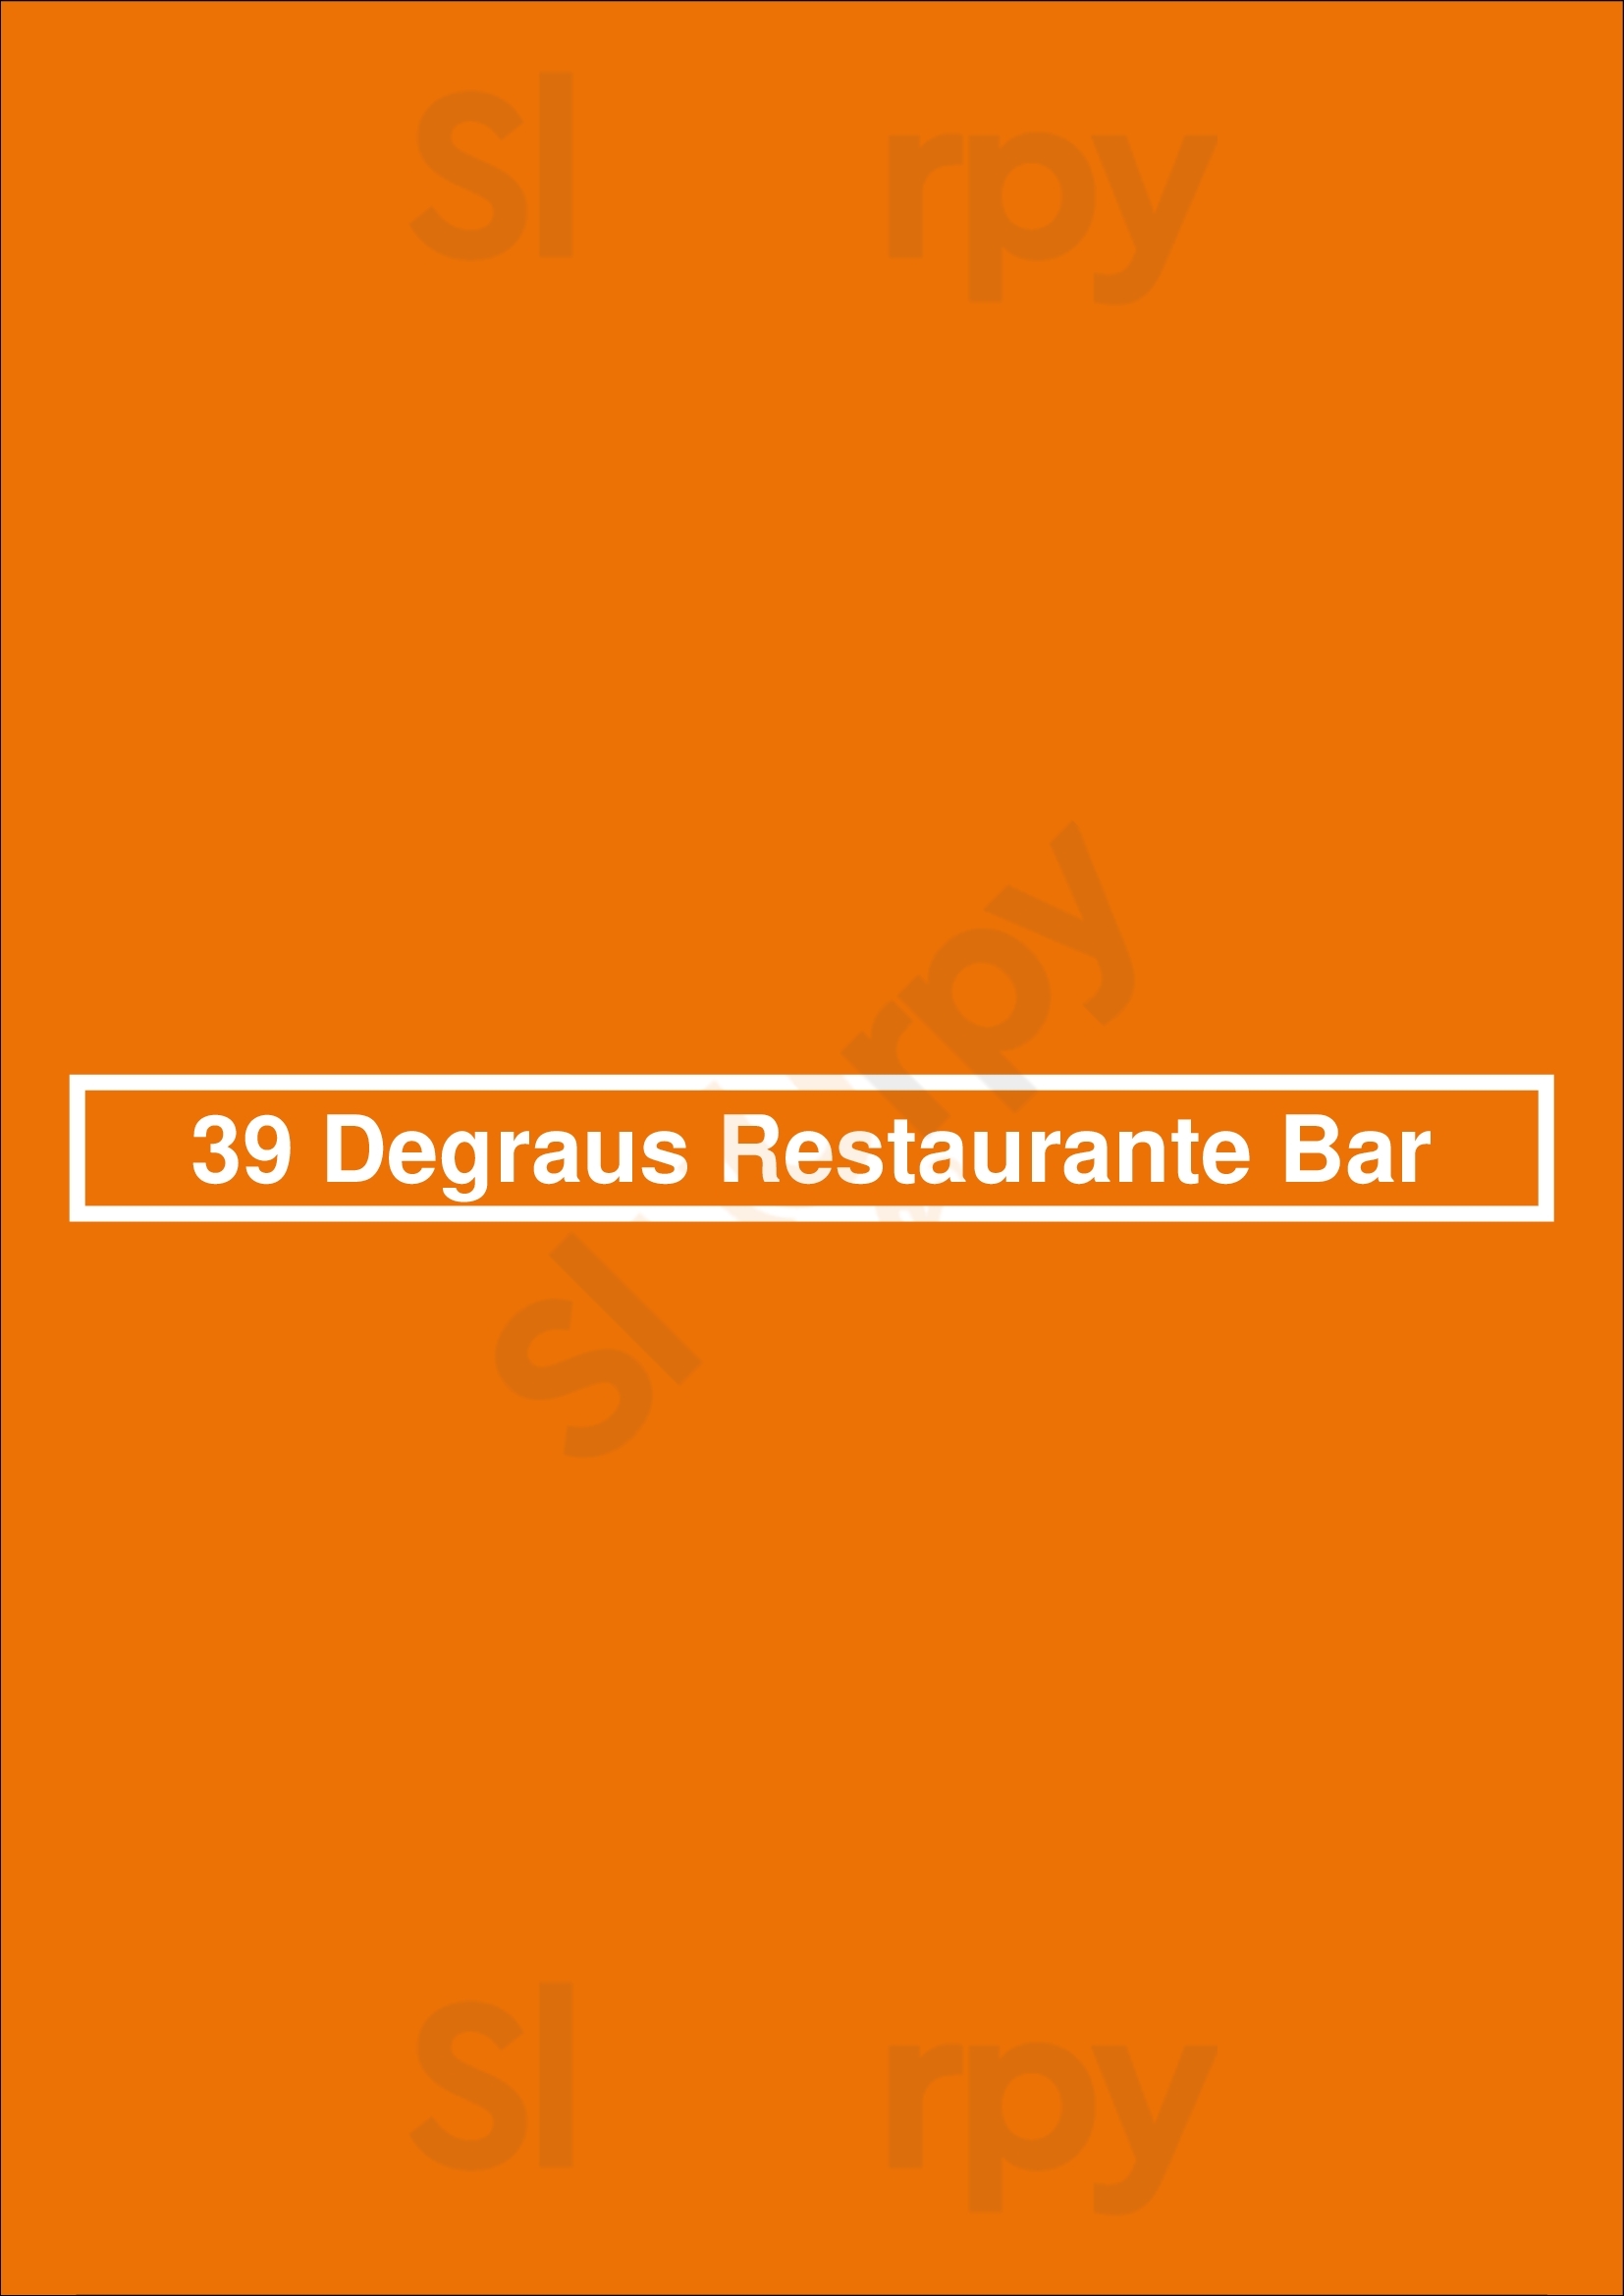 39 Degraus Restaurante Bar Lisboa Menu - 1